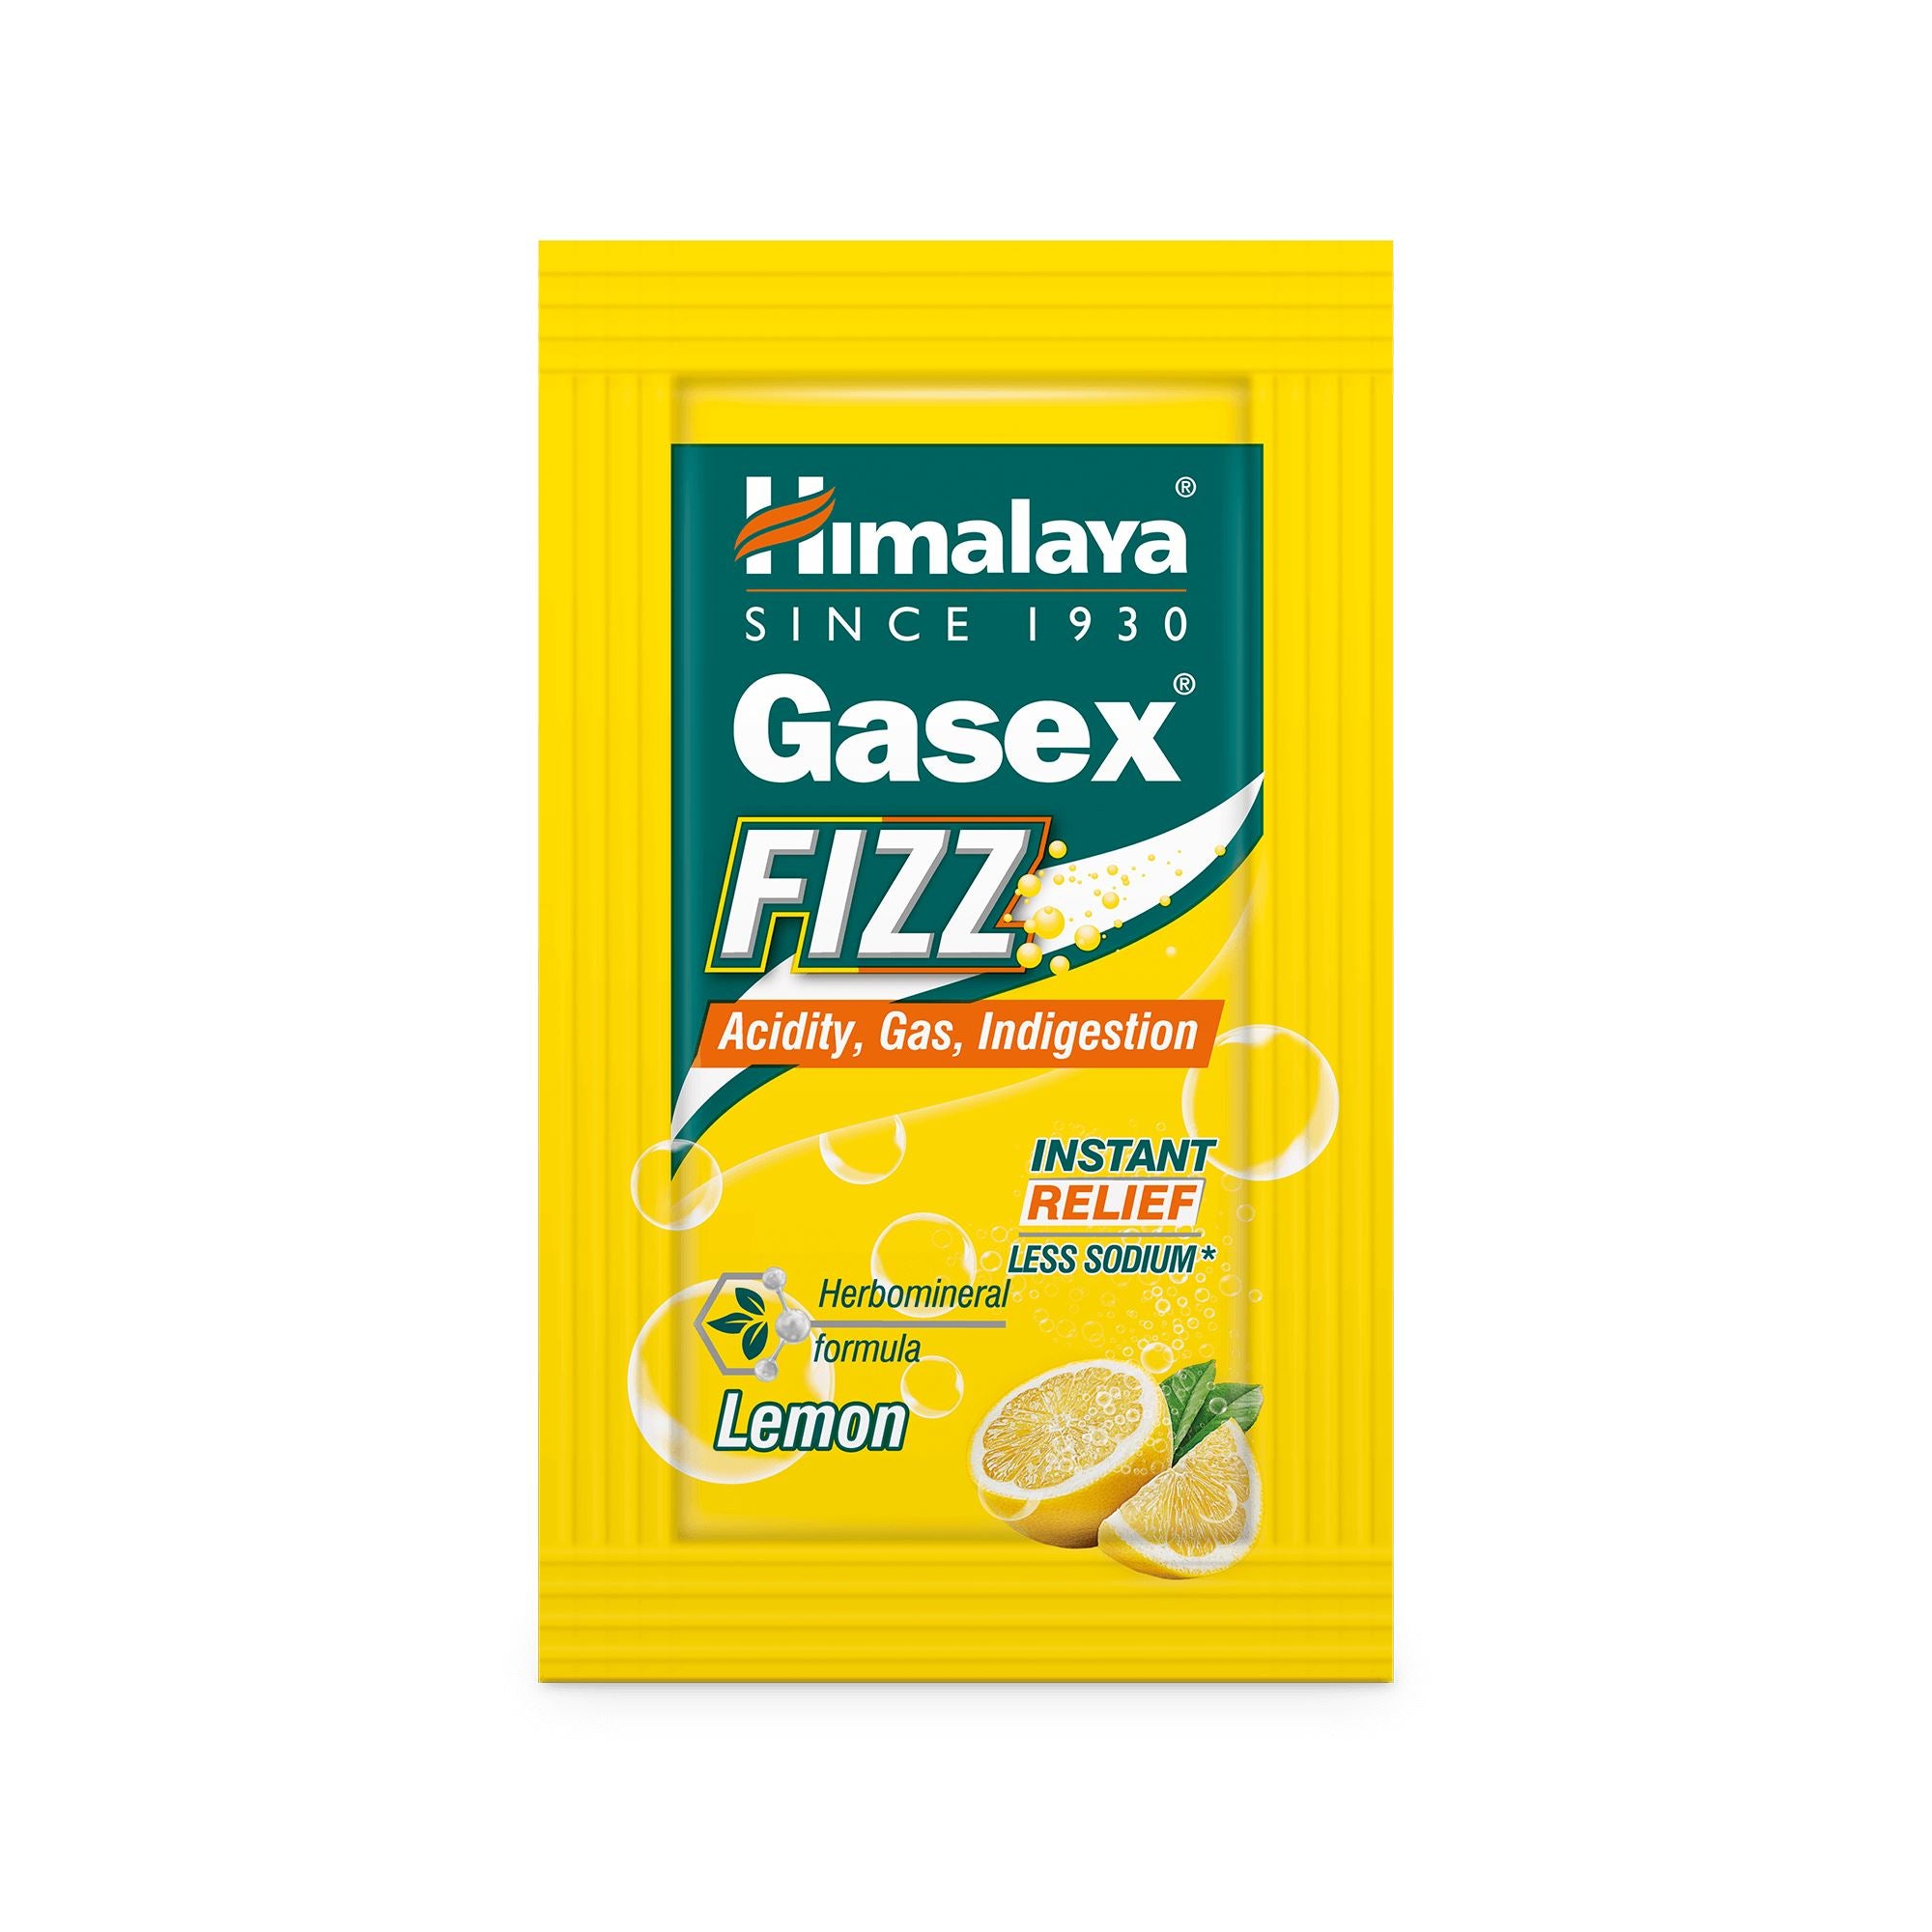 Himalaya Gasex Fizz (Lemon) - Instant Relief from Acidity